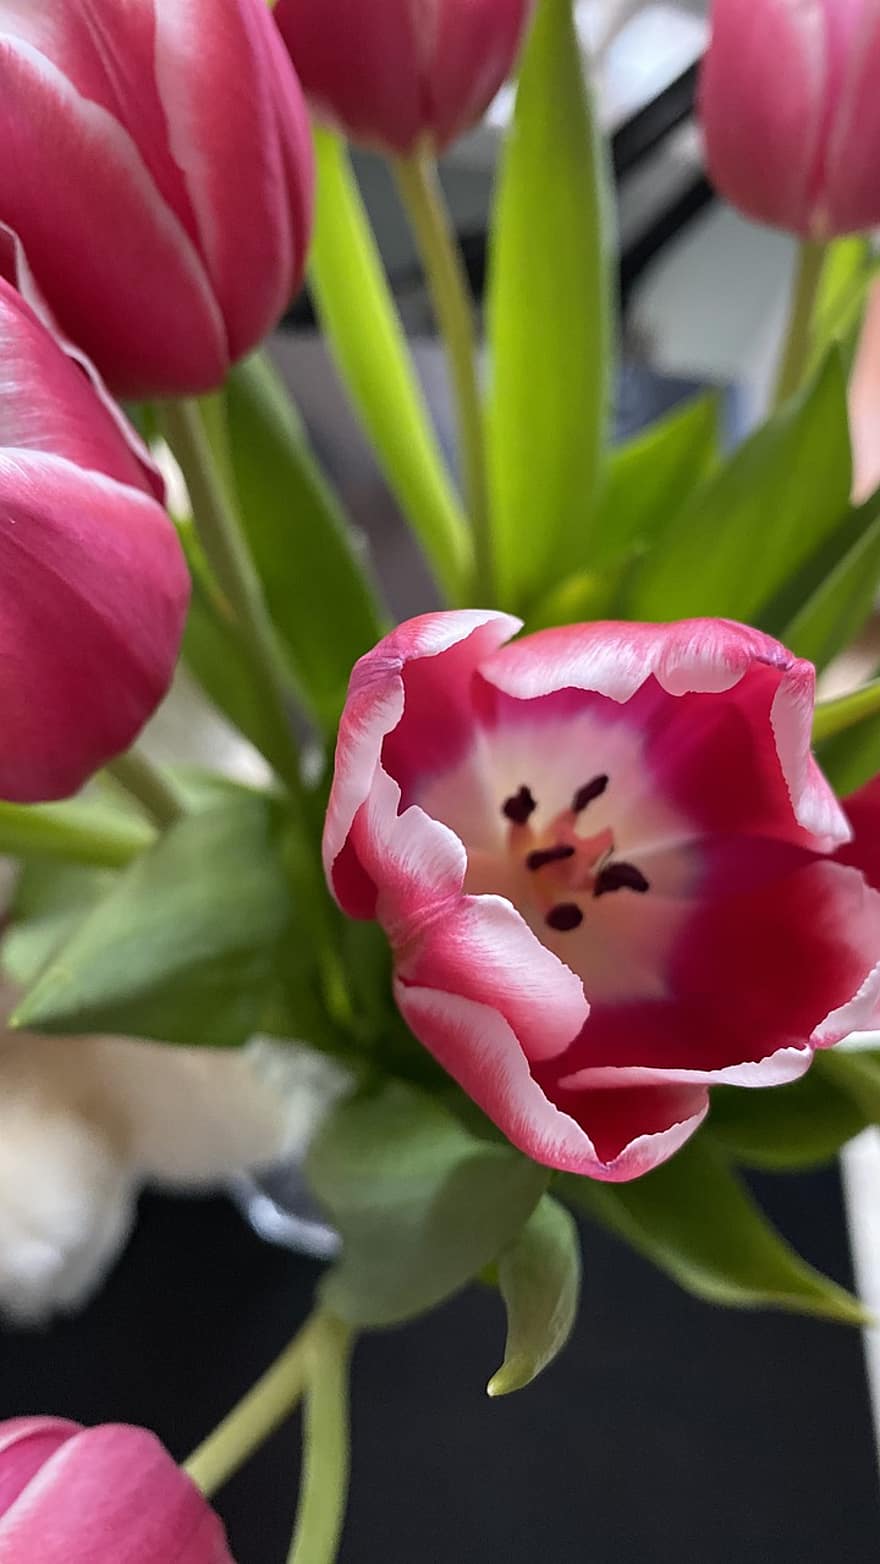 tulipes, tulipes roses, bouquet, flors de color rosa, flors, flor, planta, primer pla, pètal, cap de flor, full